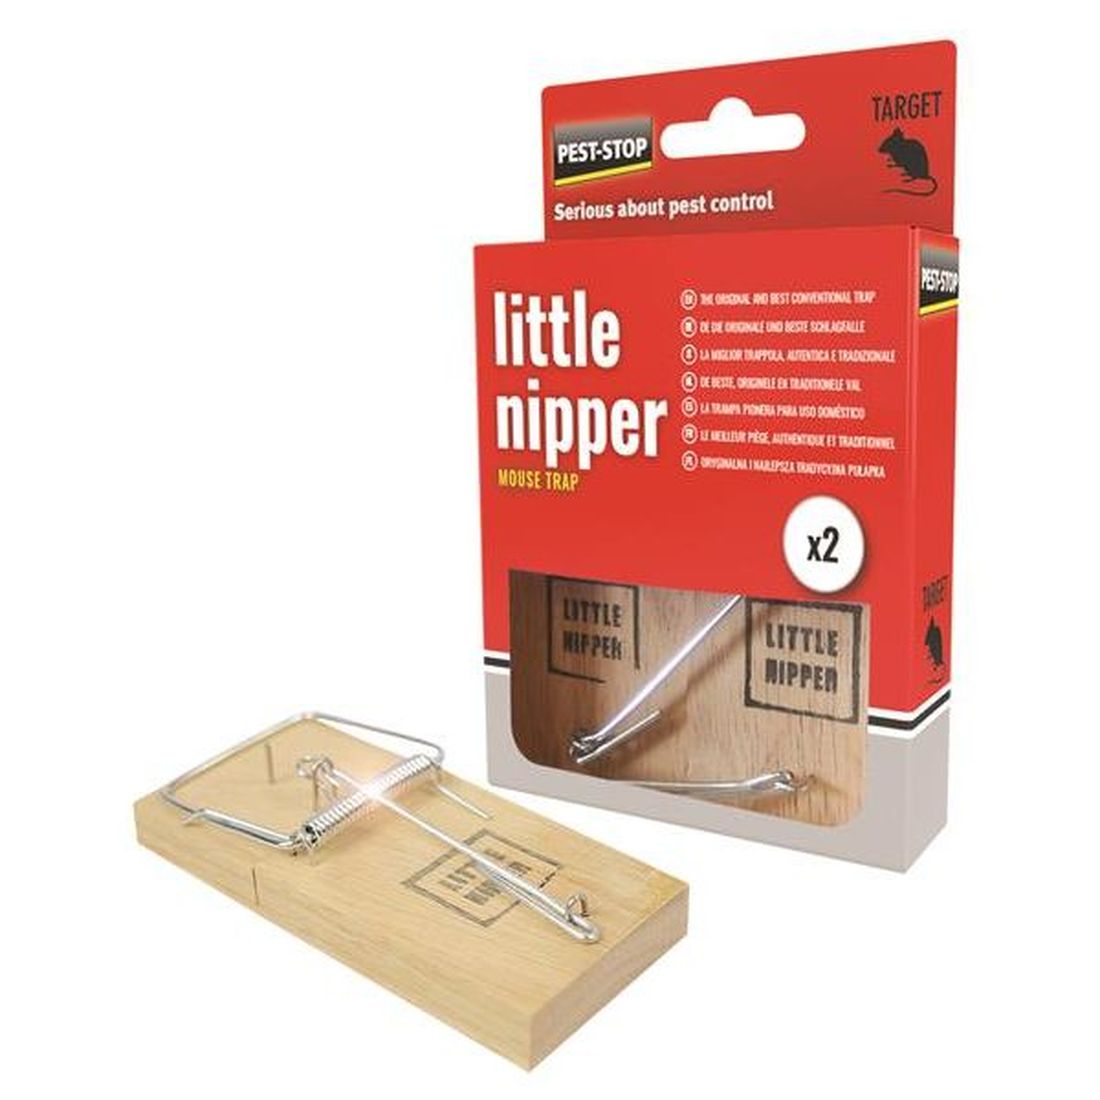 Pest-Stop Little Nipper Mouse Trap (Box 2)  